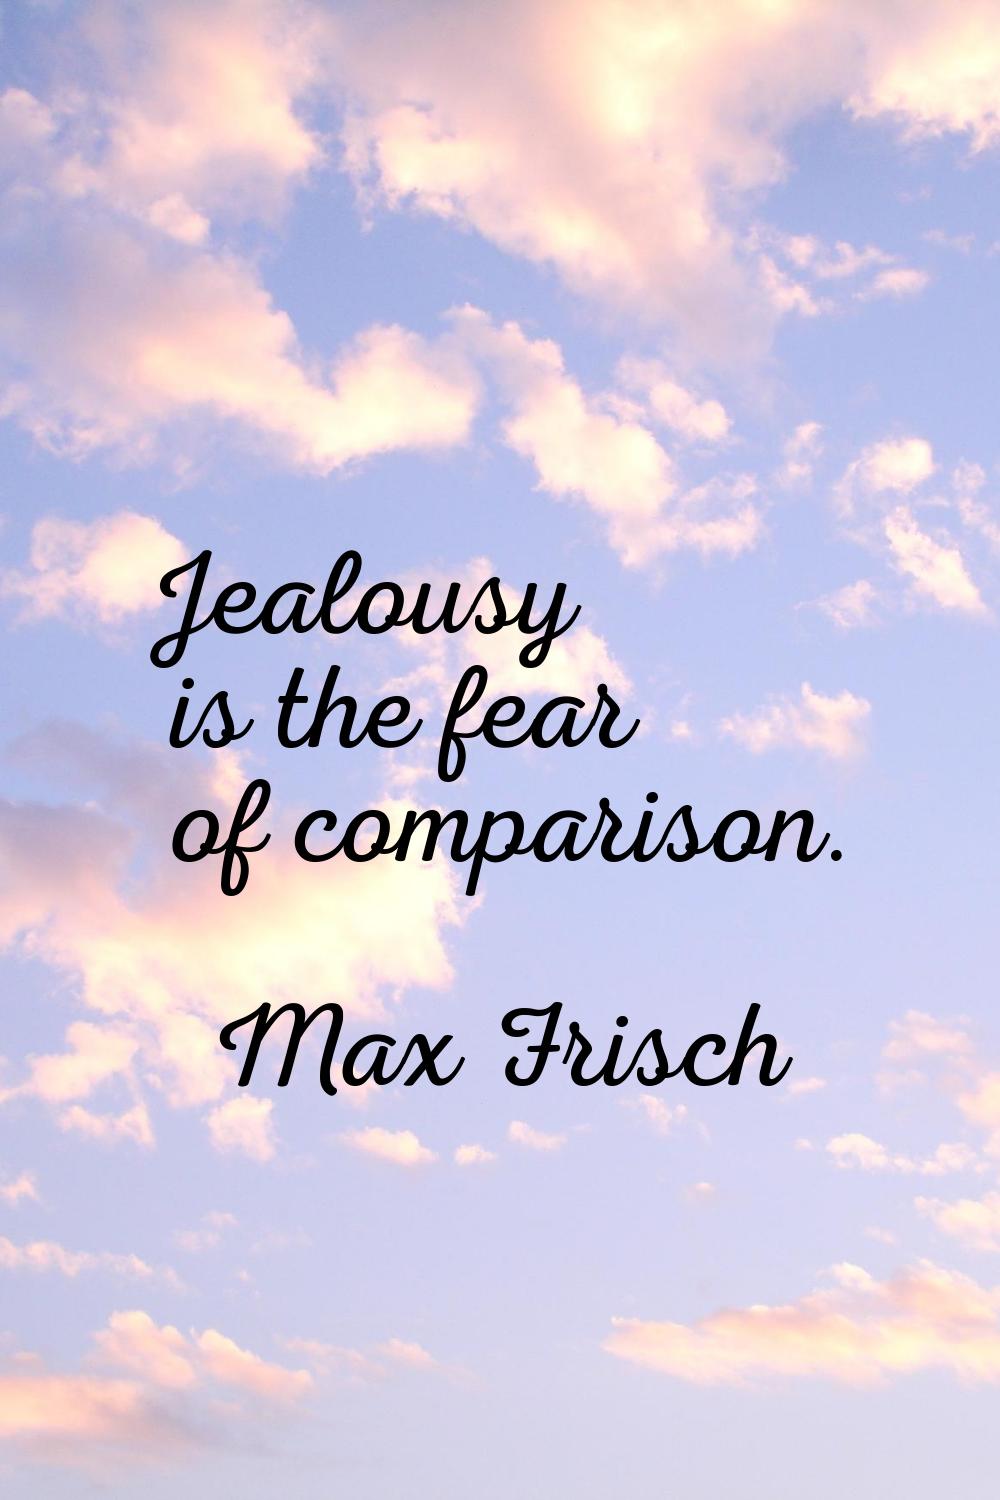 Jealousy is the fear of comparison.